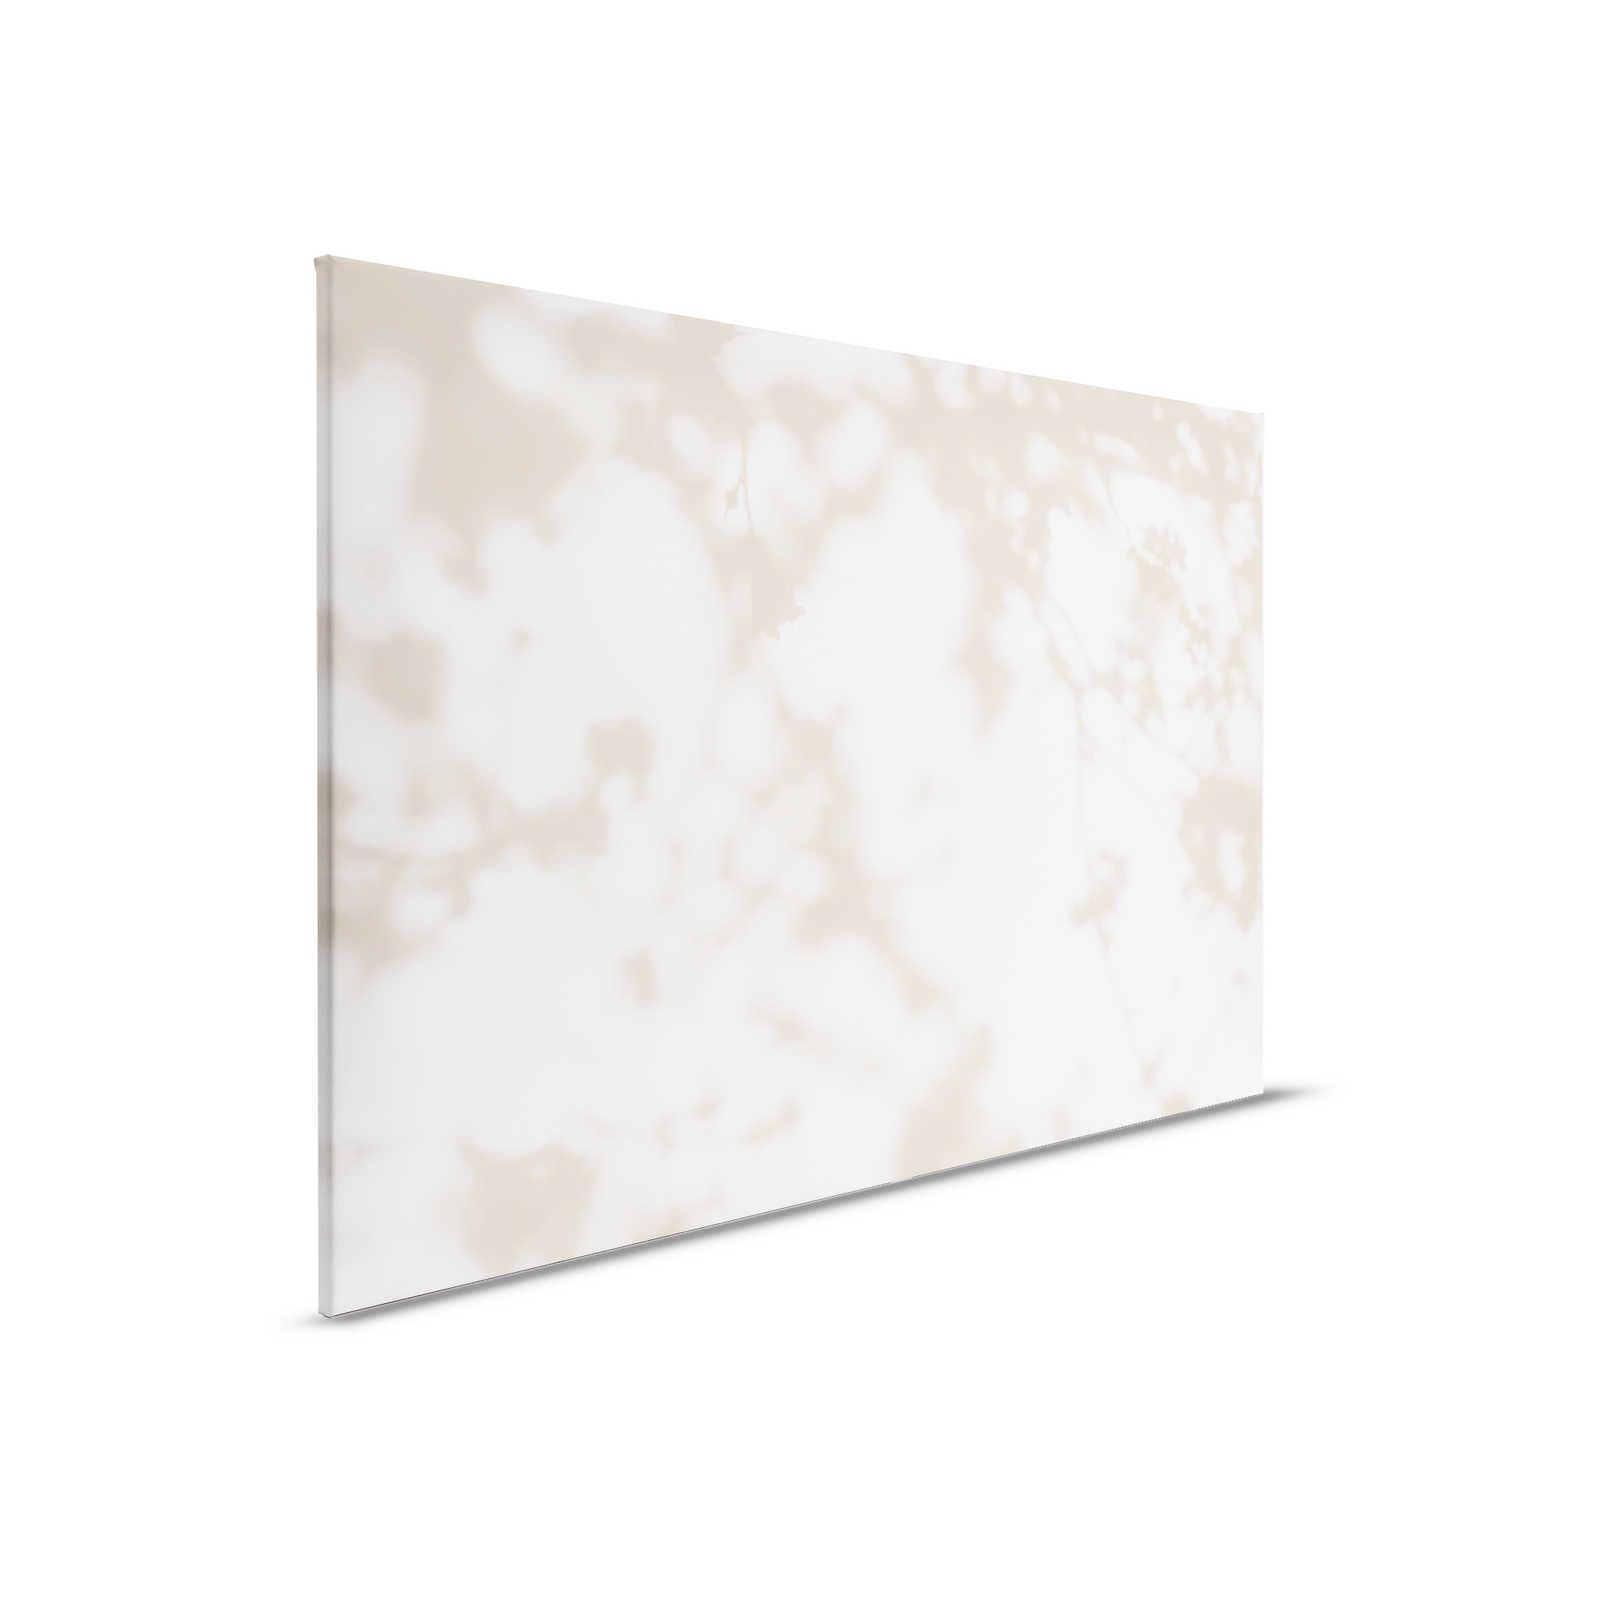 Light Room 3 - Cuadro en lienzo Sombras de la naturaleza en beige y blanco - 0,90 m x 0,60 m
